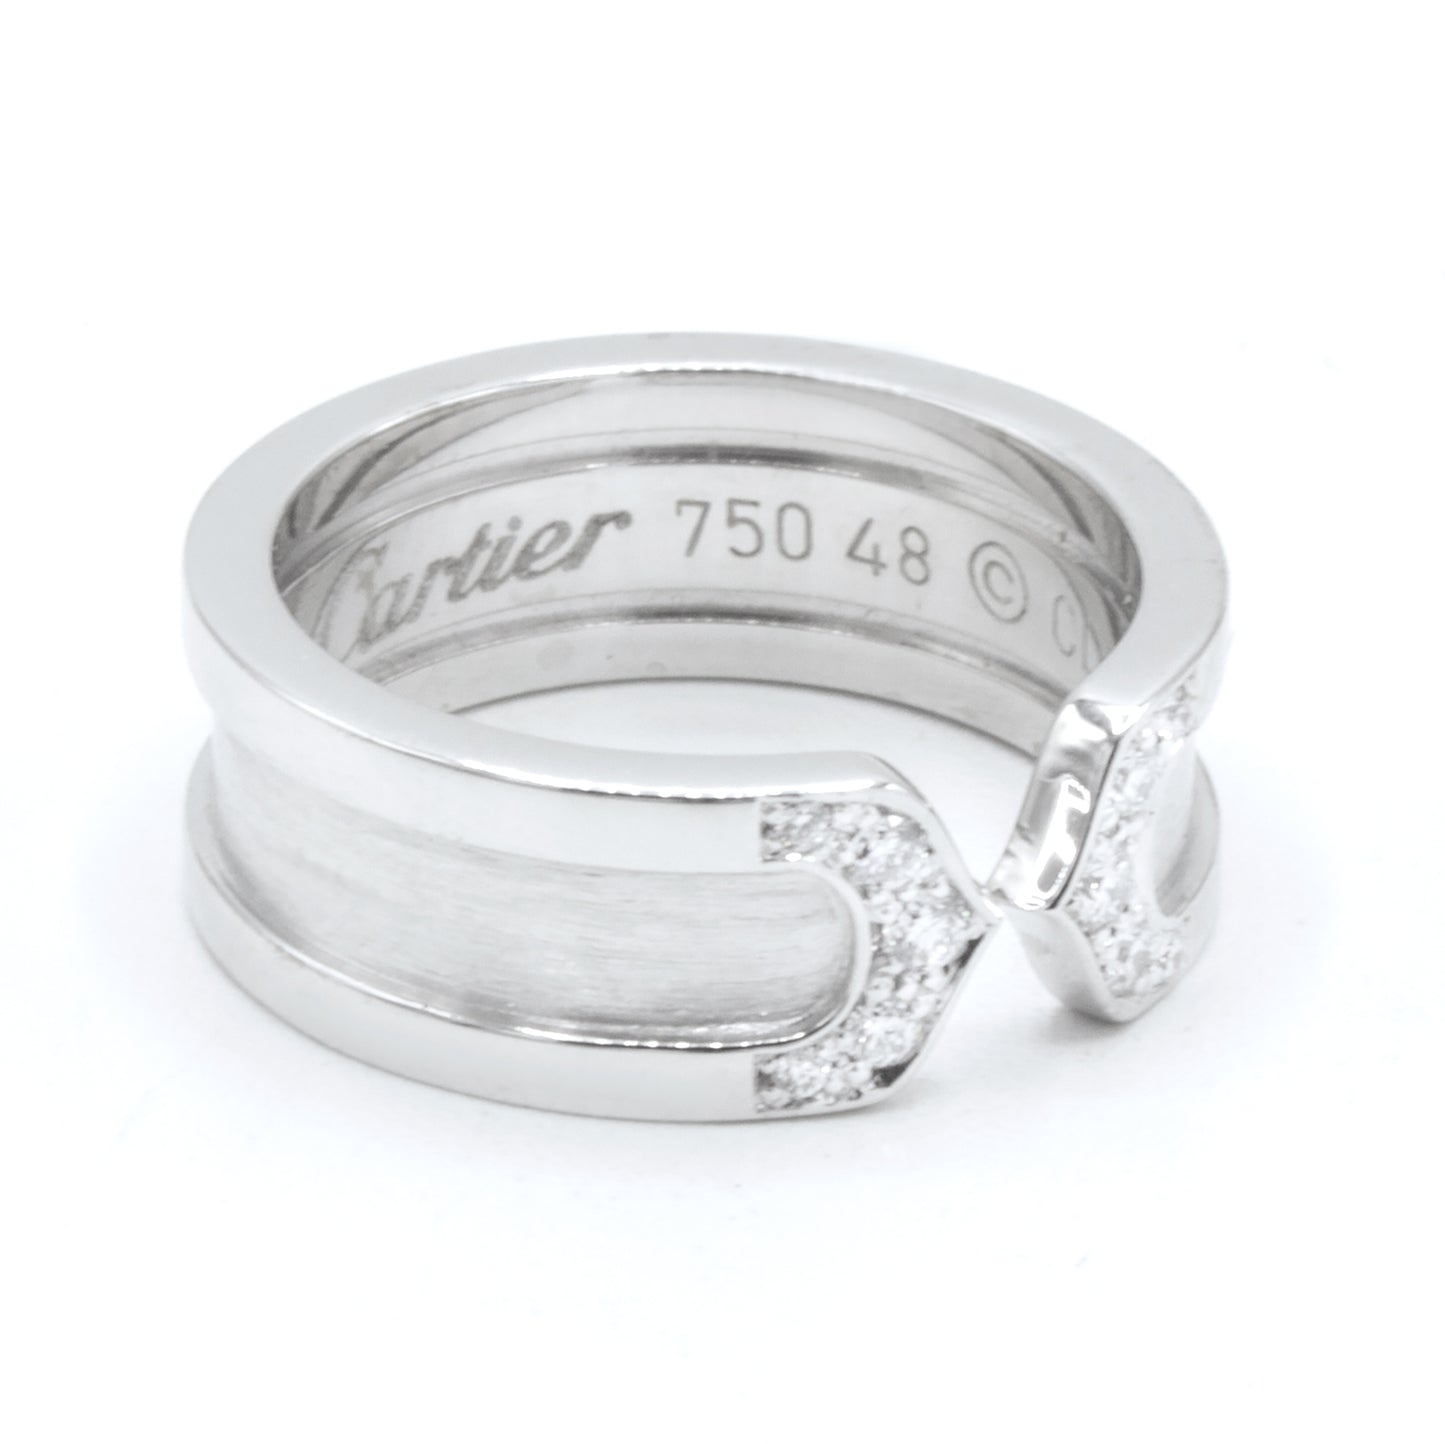 Cartier "C de Cartier" ring